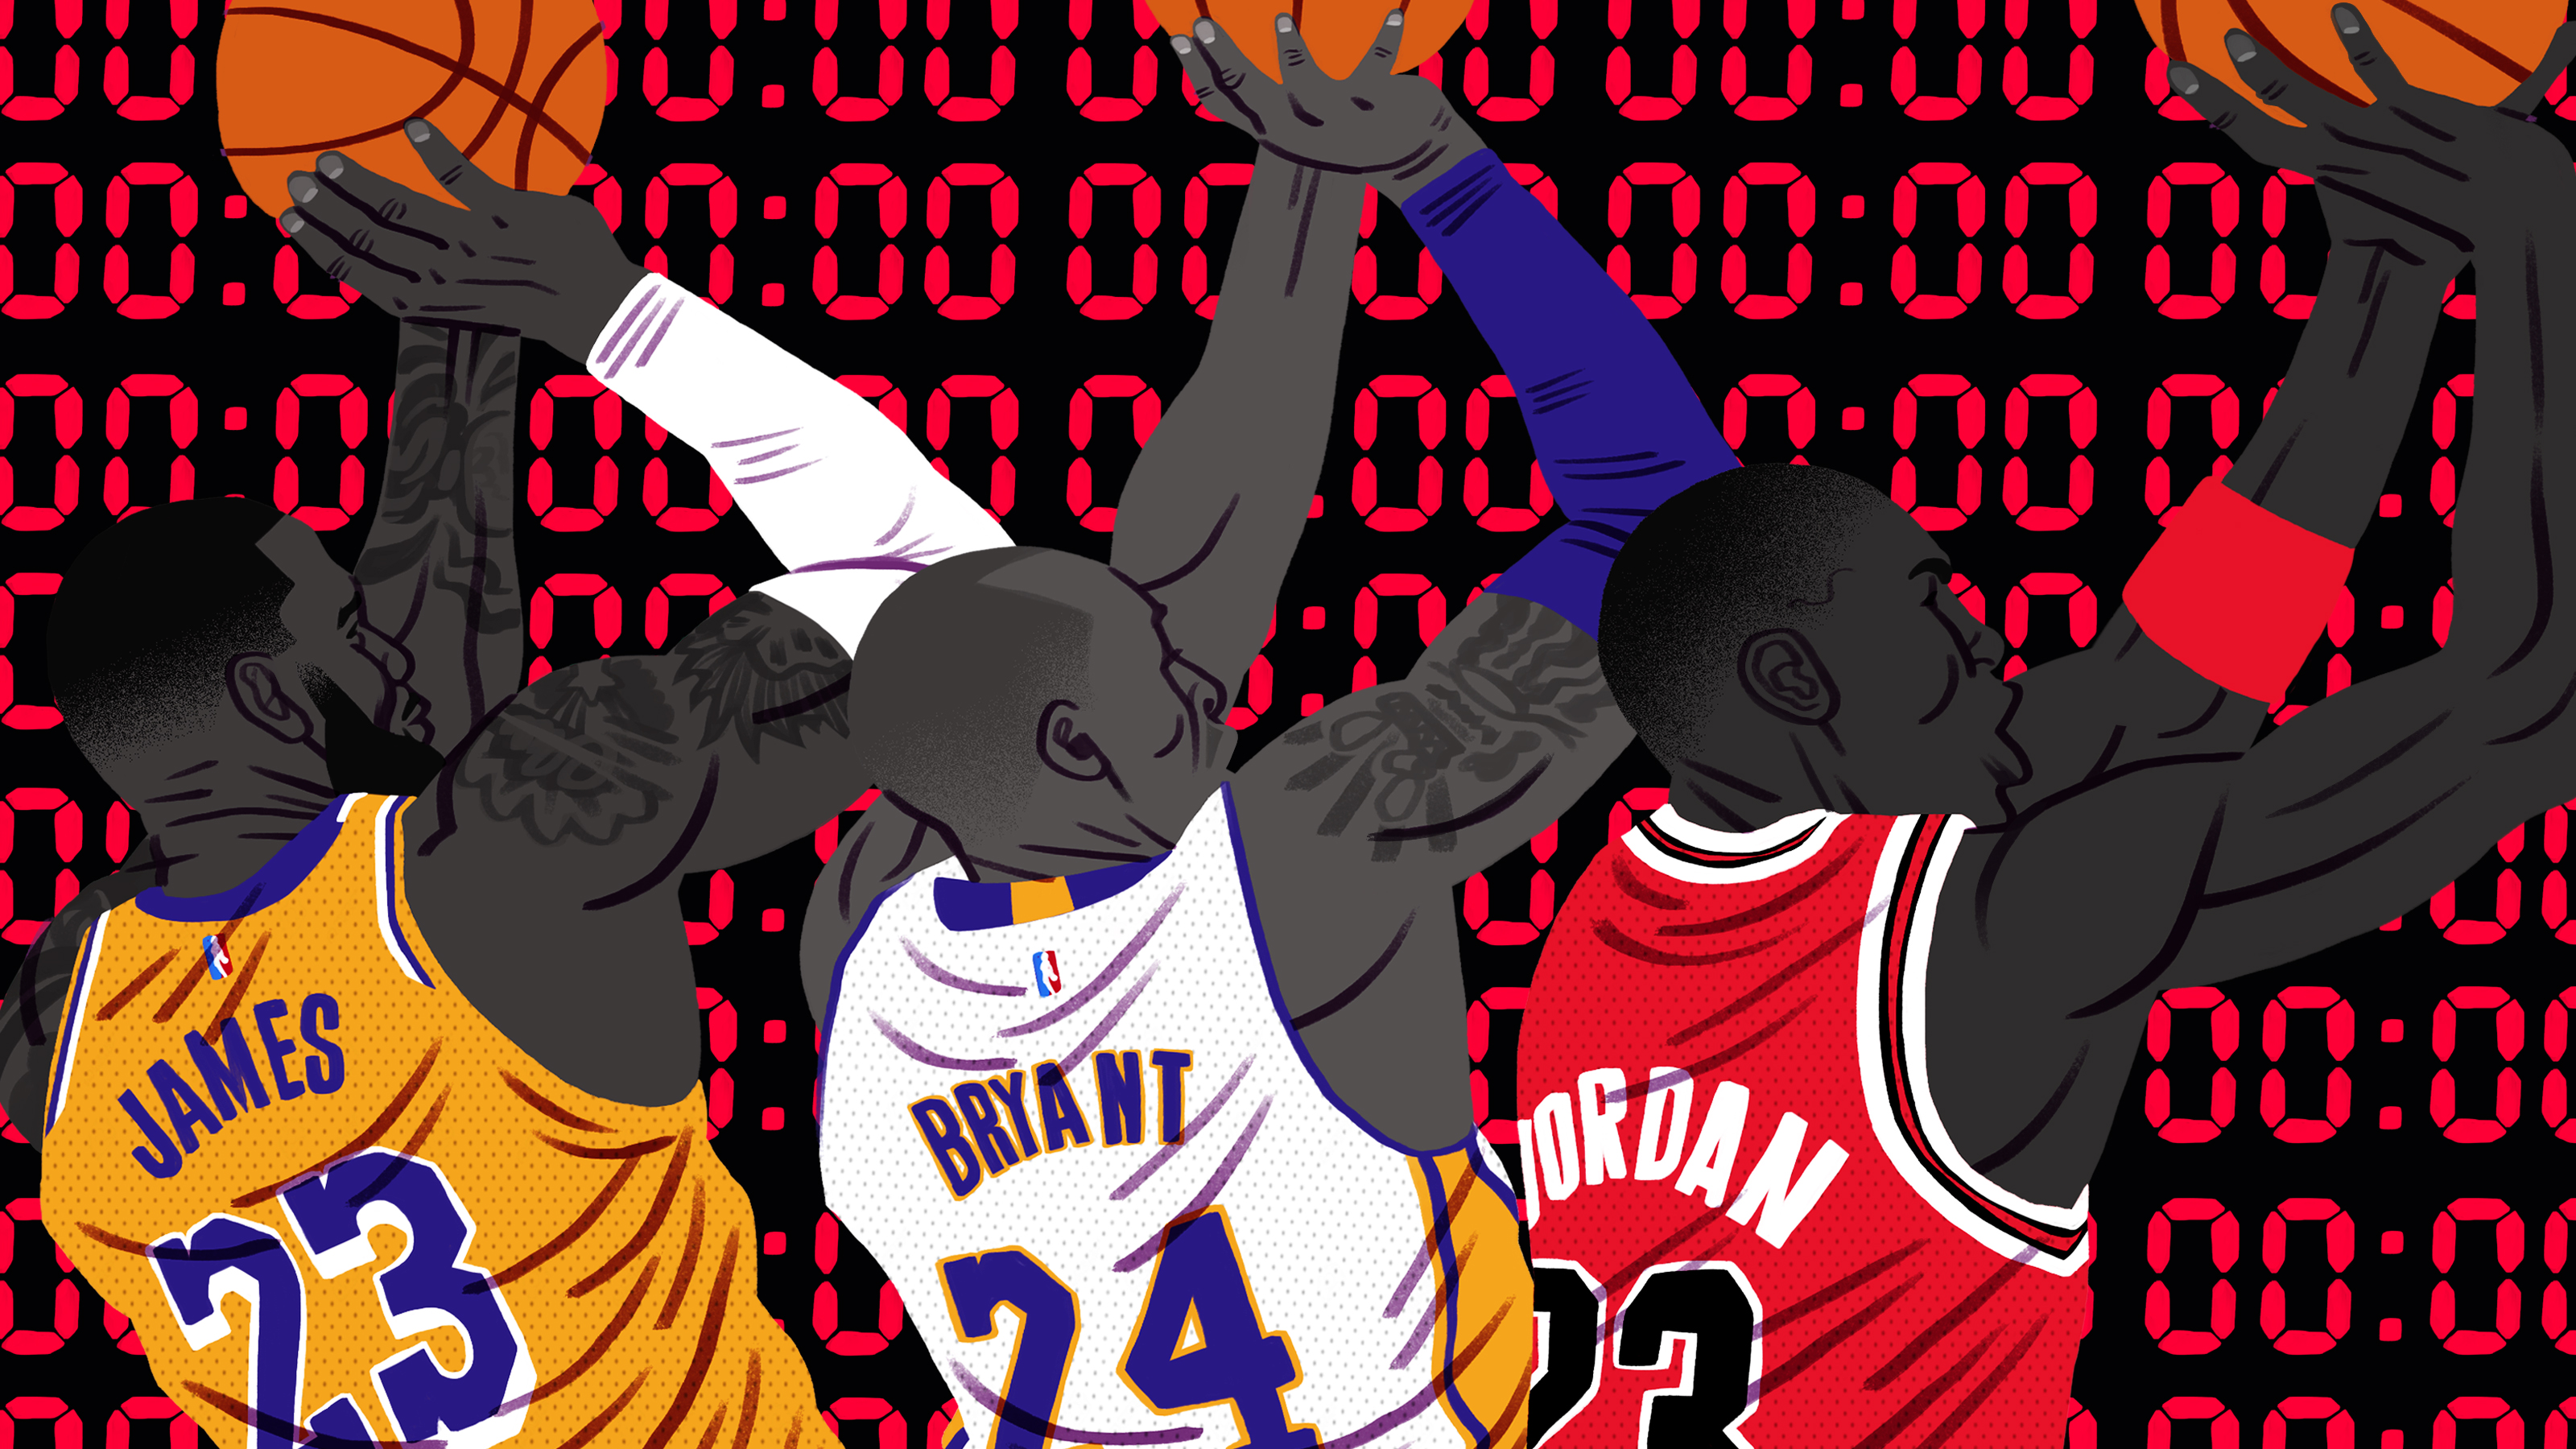 Best Selling NBA Jerseys of All-Time: MJ, Bird, LeBron, Kobe, Dr